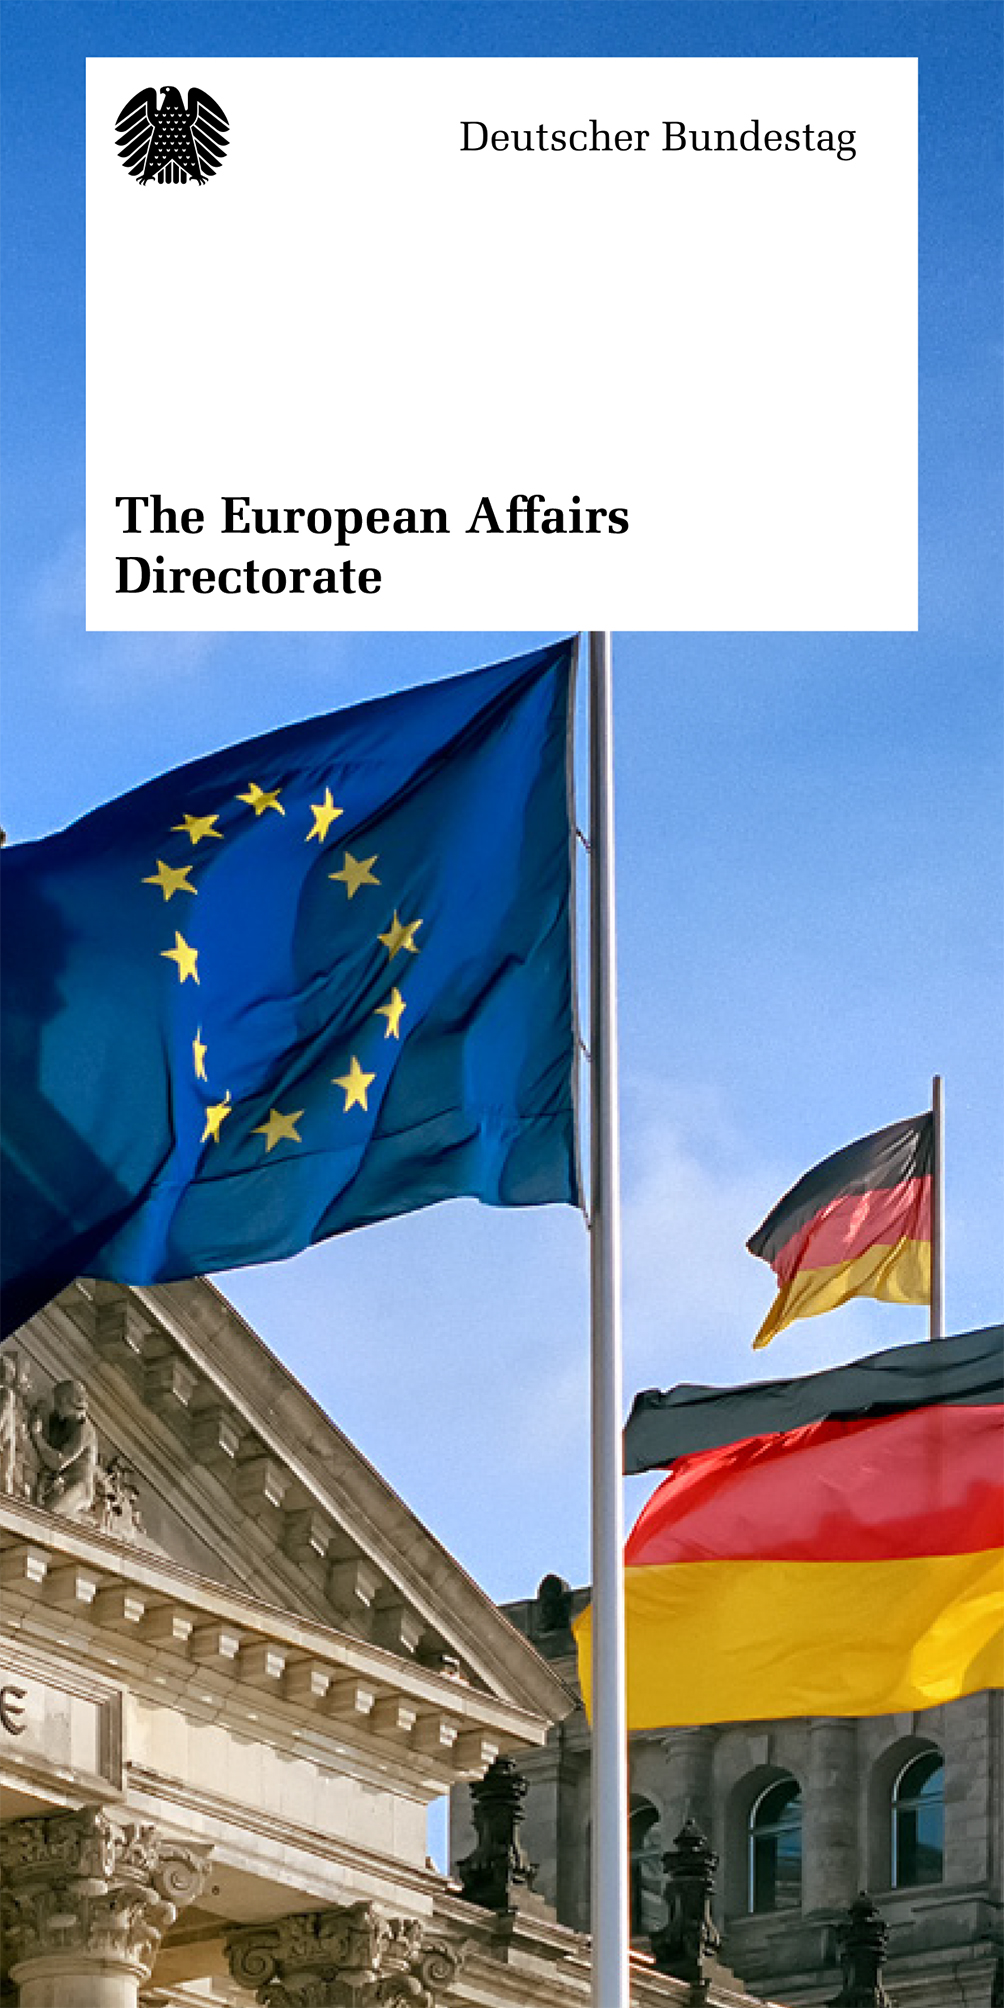 The European Affairs Directorate